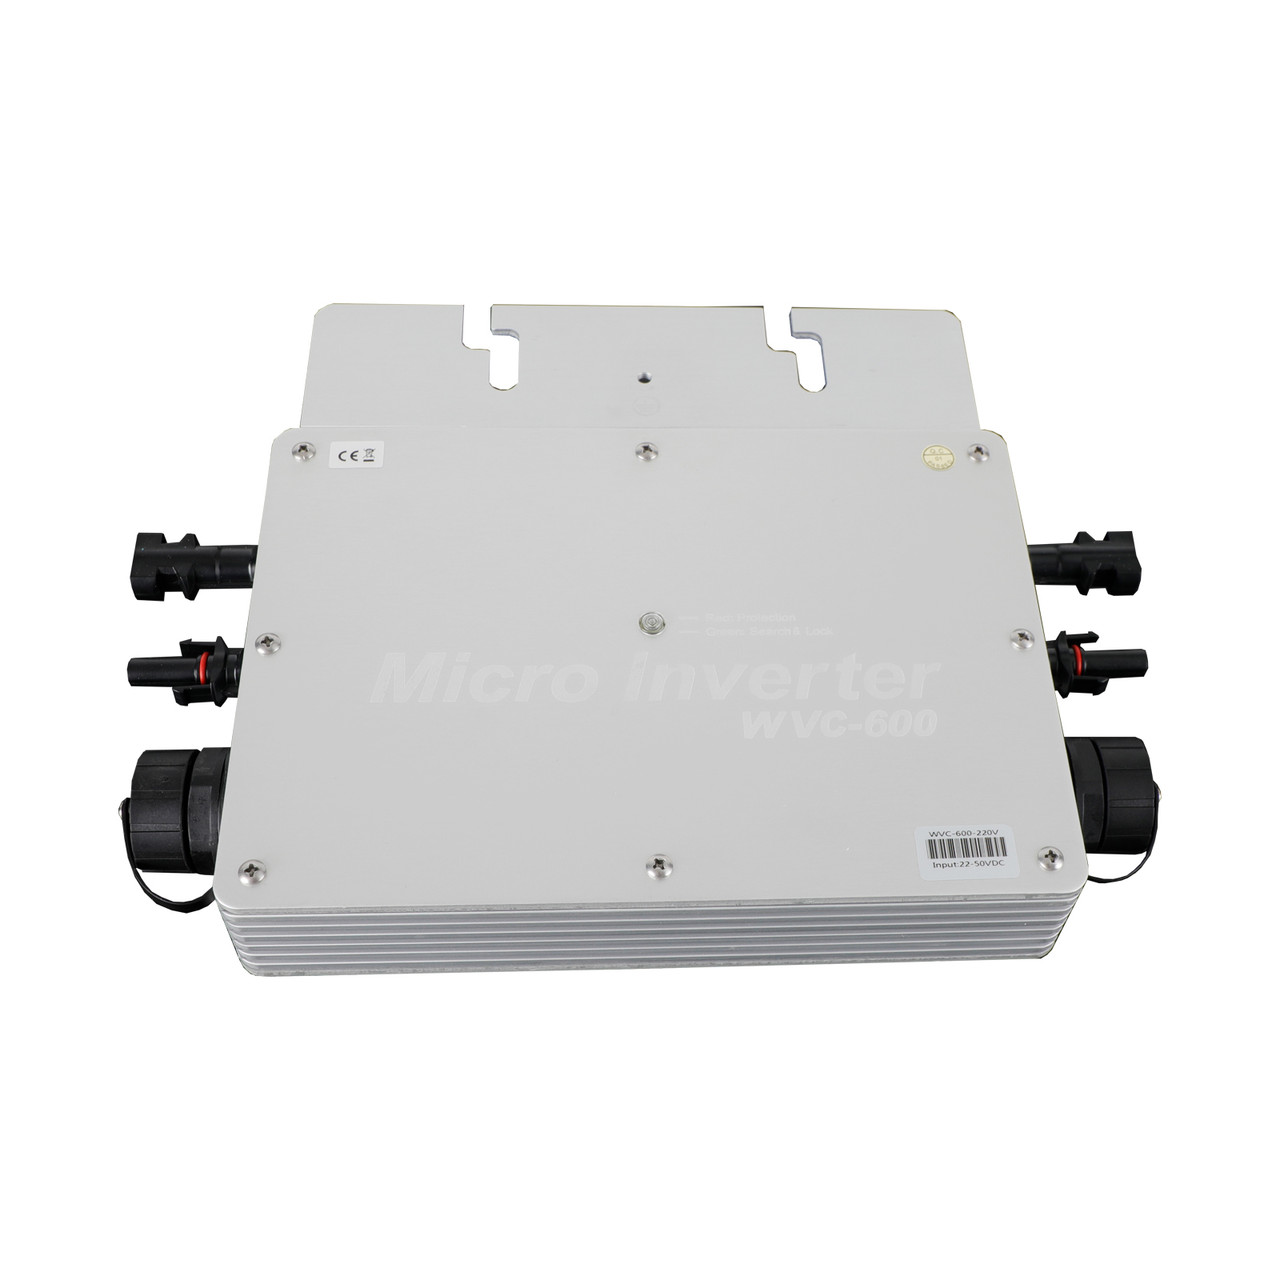 700W/230Vac IP65 Waterproof Solar Inverter Grid Tie MPPT Micro Inverter with Display